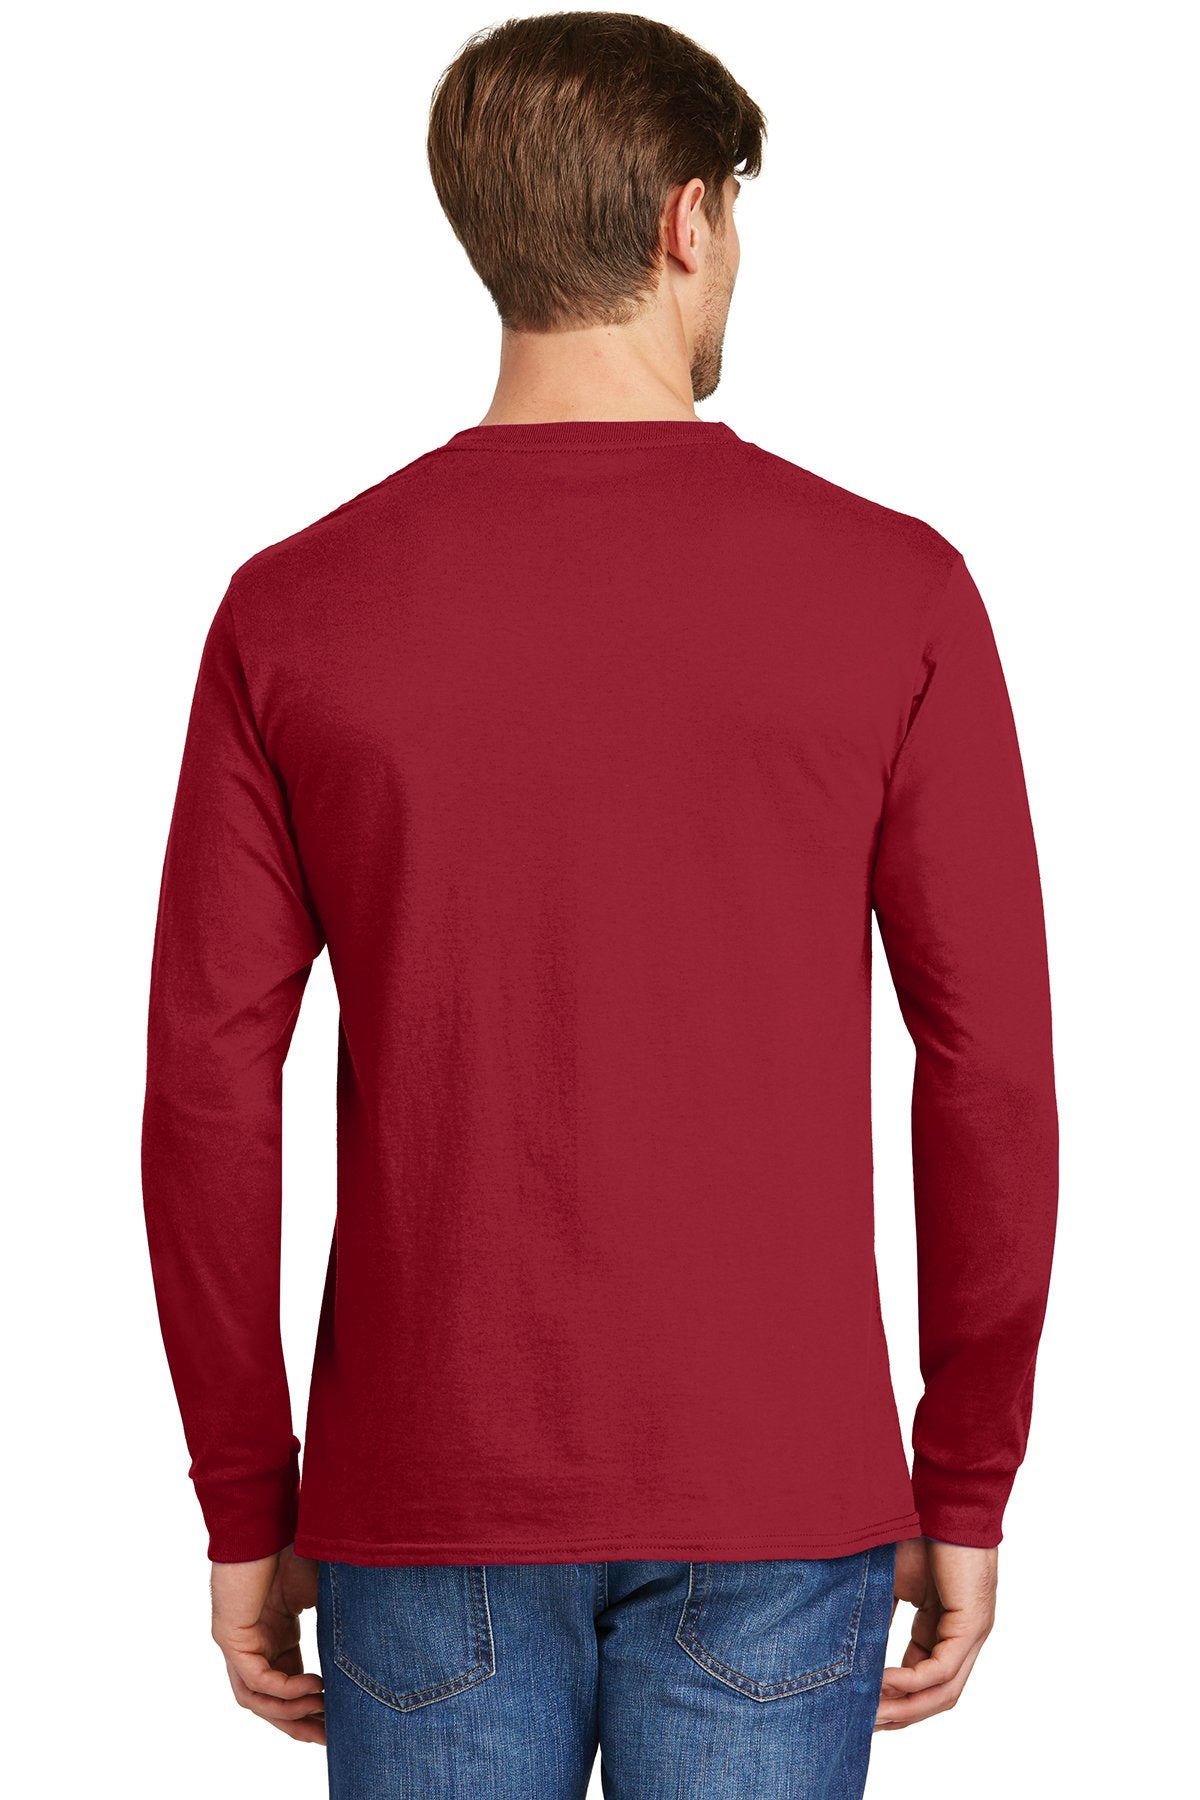 Hanes Tagless Cotton Long Sleeve T Shirt In Deep Red Add A Custom Design